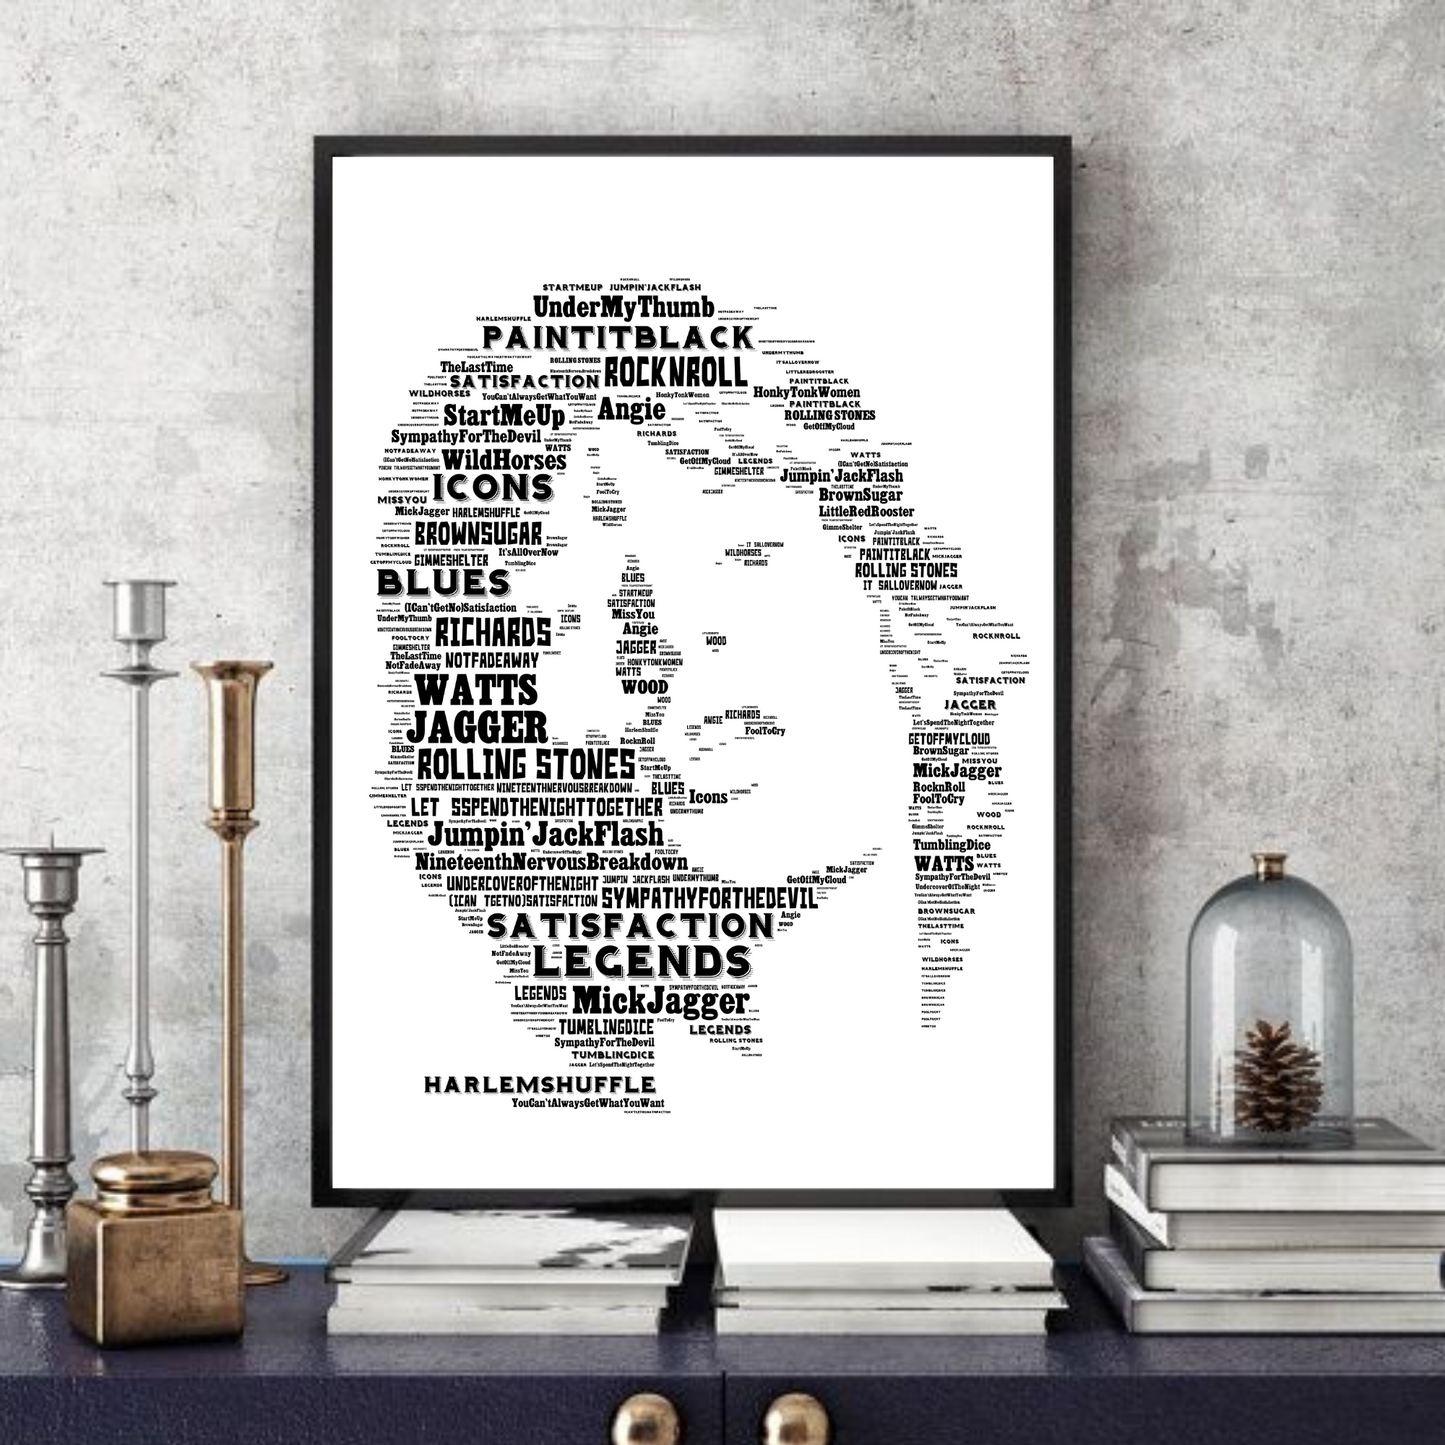 Mick Jagger Rolling Stones 2 - Word Art Typography Portrait in songs Memorabilia/Collectible/Print